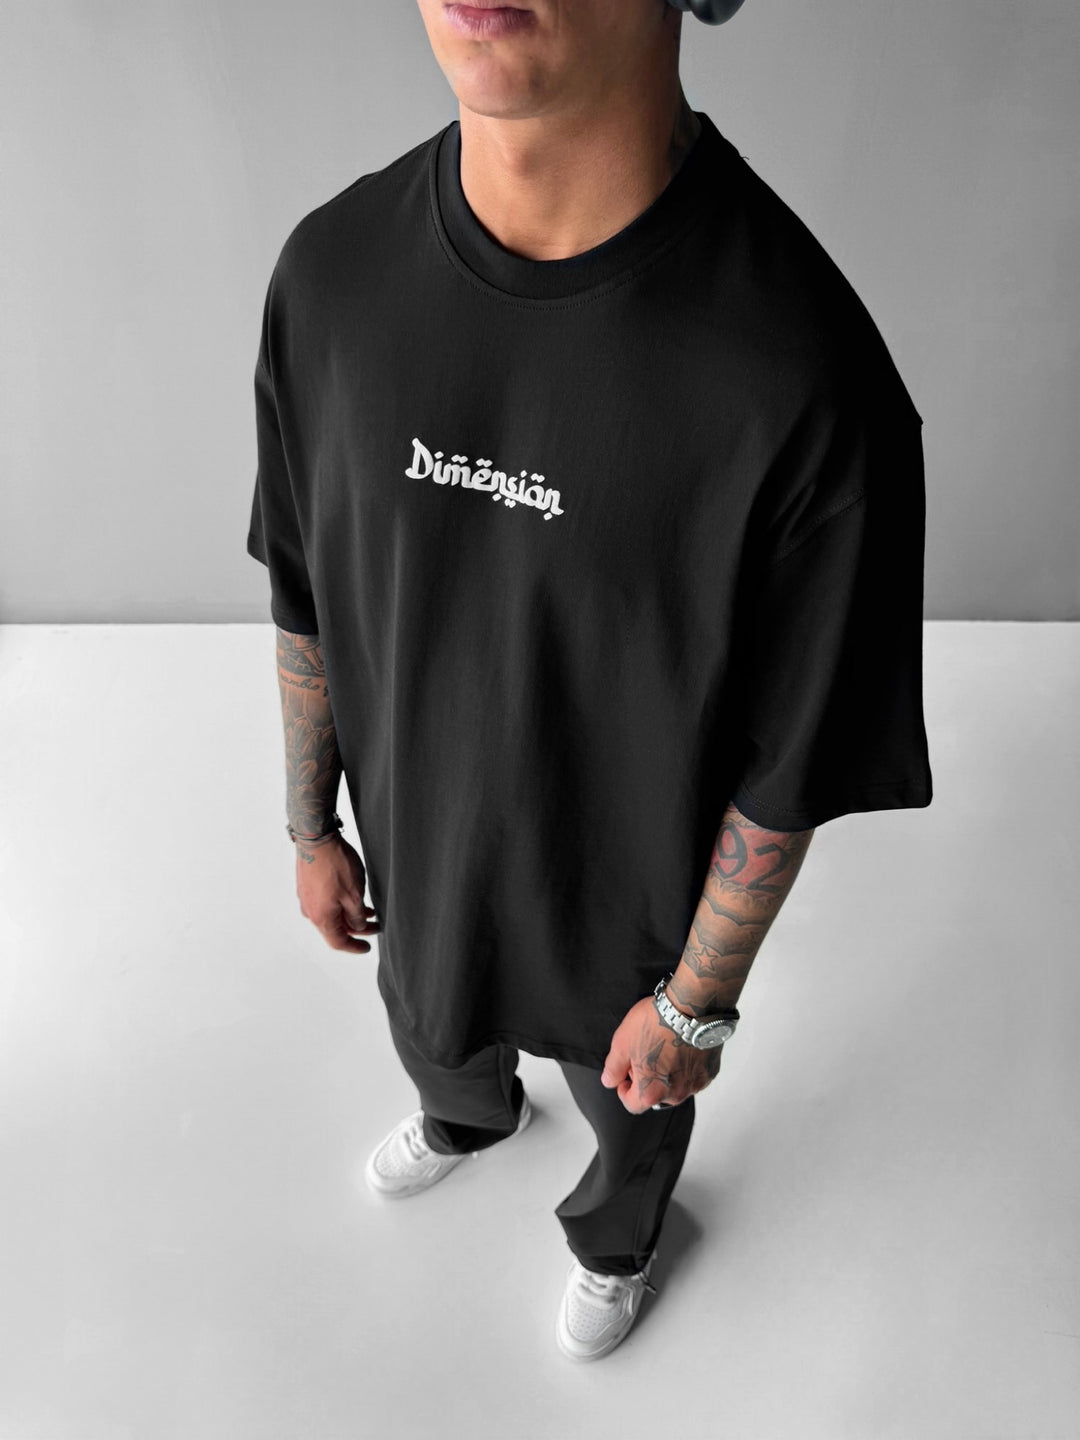 Oversize Dimenson T-shirt - Black and Turquoise